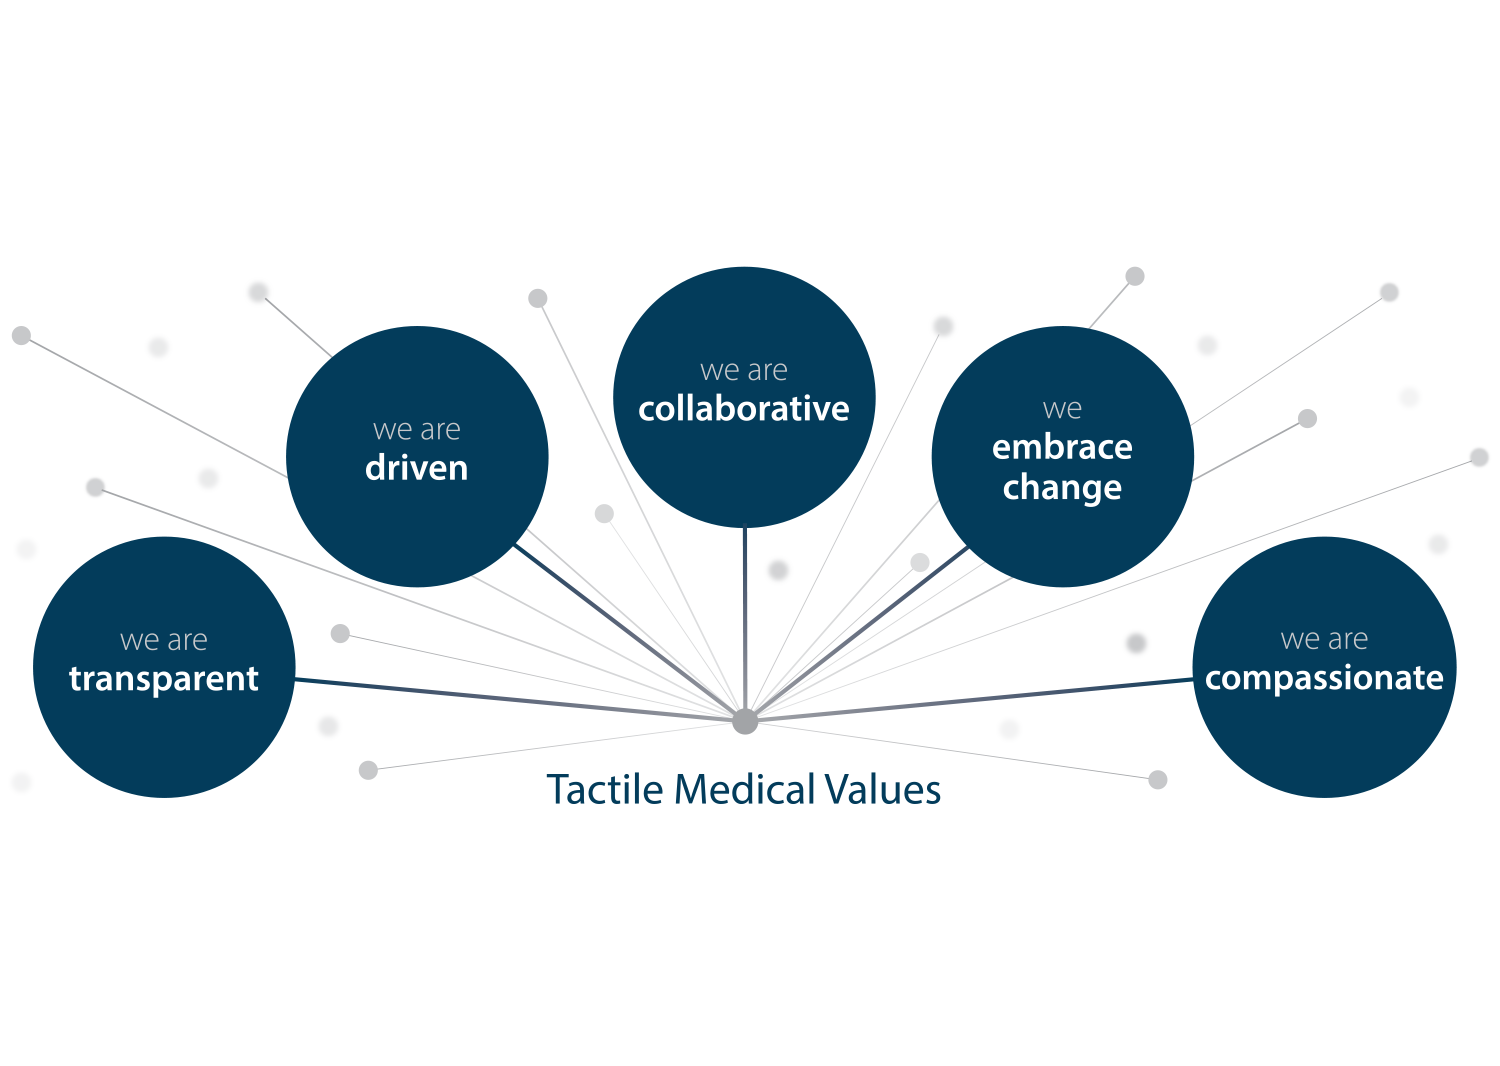 Tactile Medical Values - We are transparent, driven, collaborative, embrace change, compassionate.